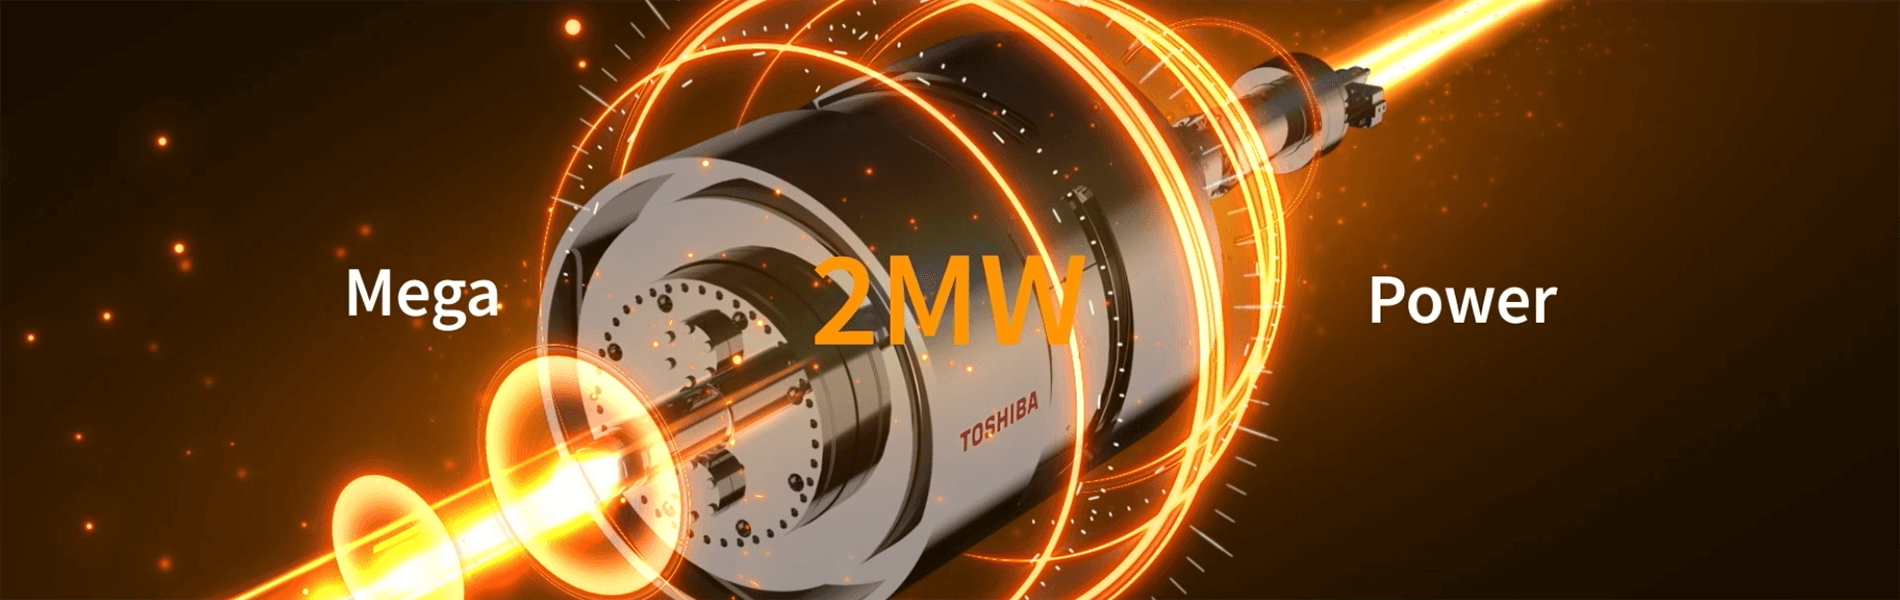 2MW Mega Power Toshiba Superconducting Motor